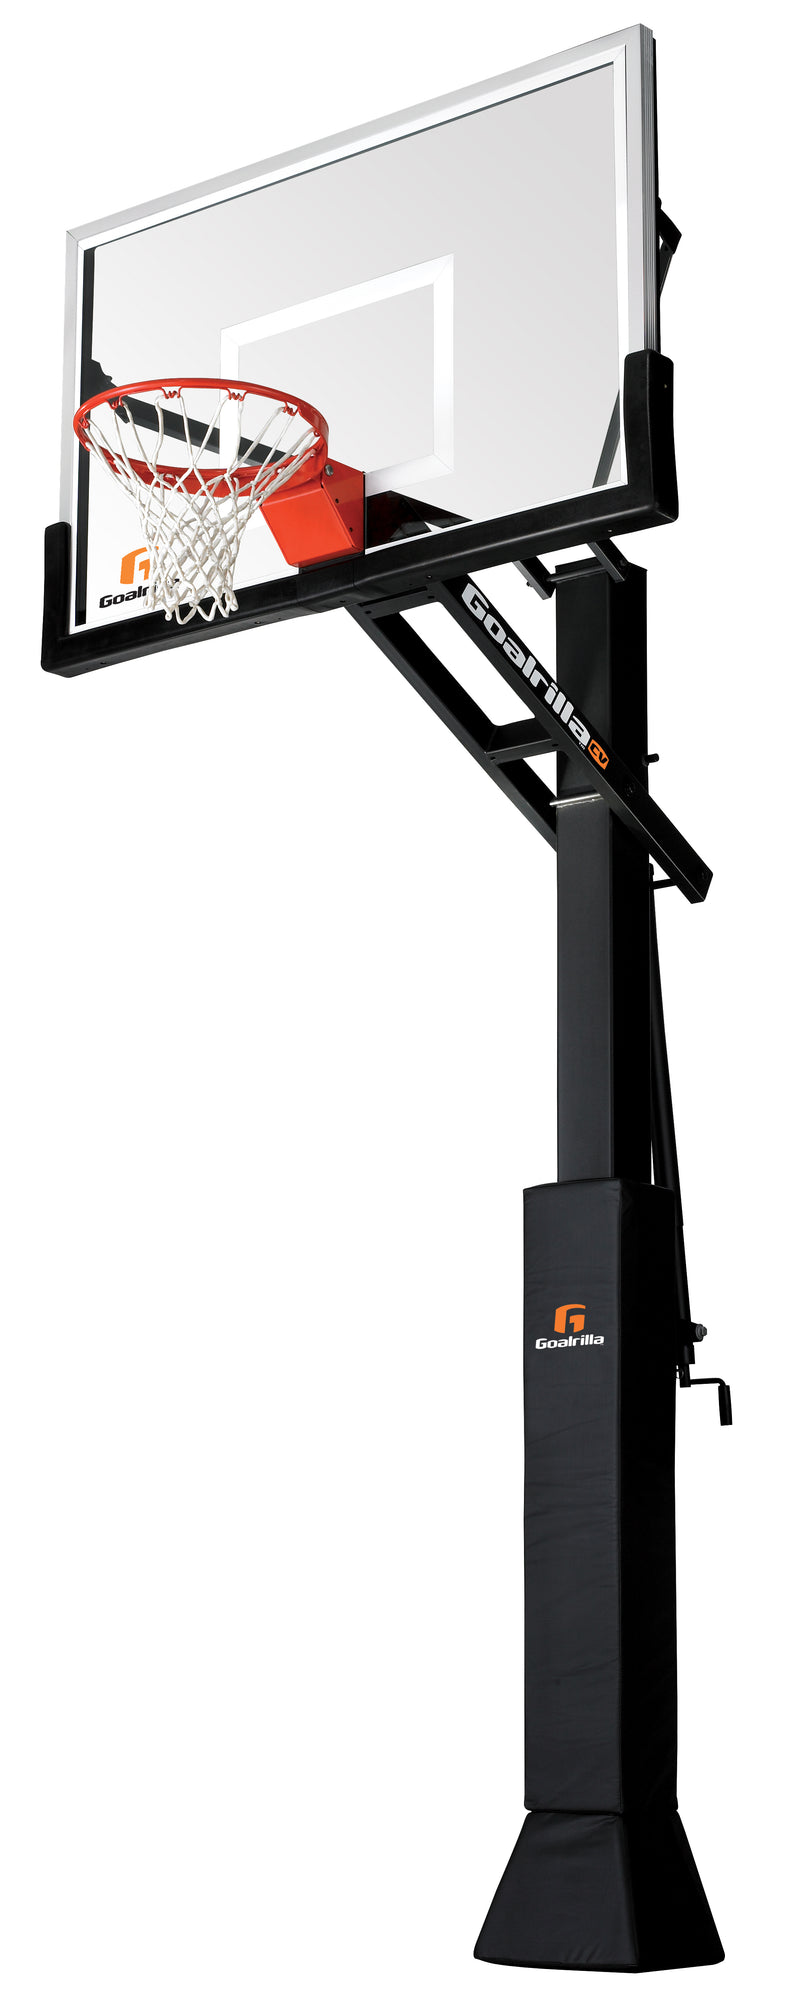 Goalrilla Universal Basketball Pole Pad